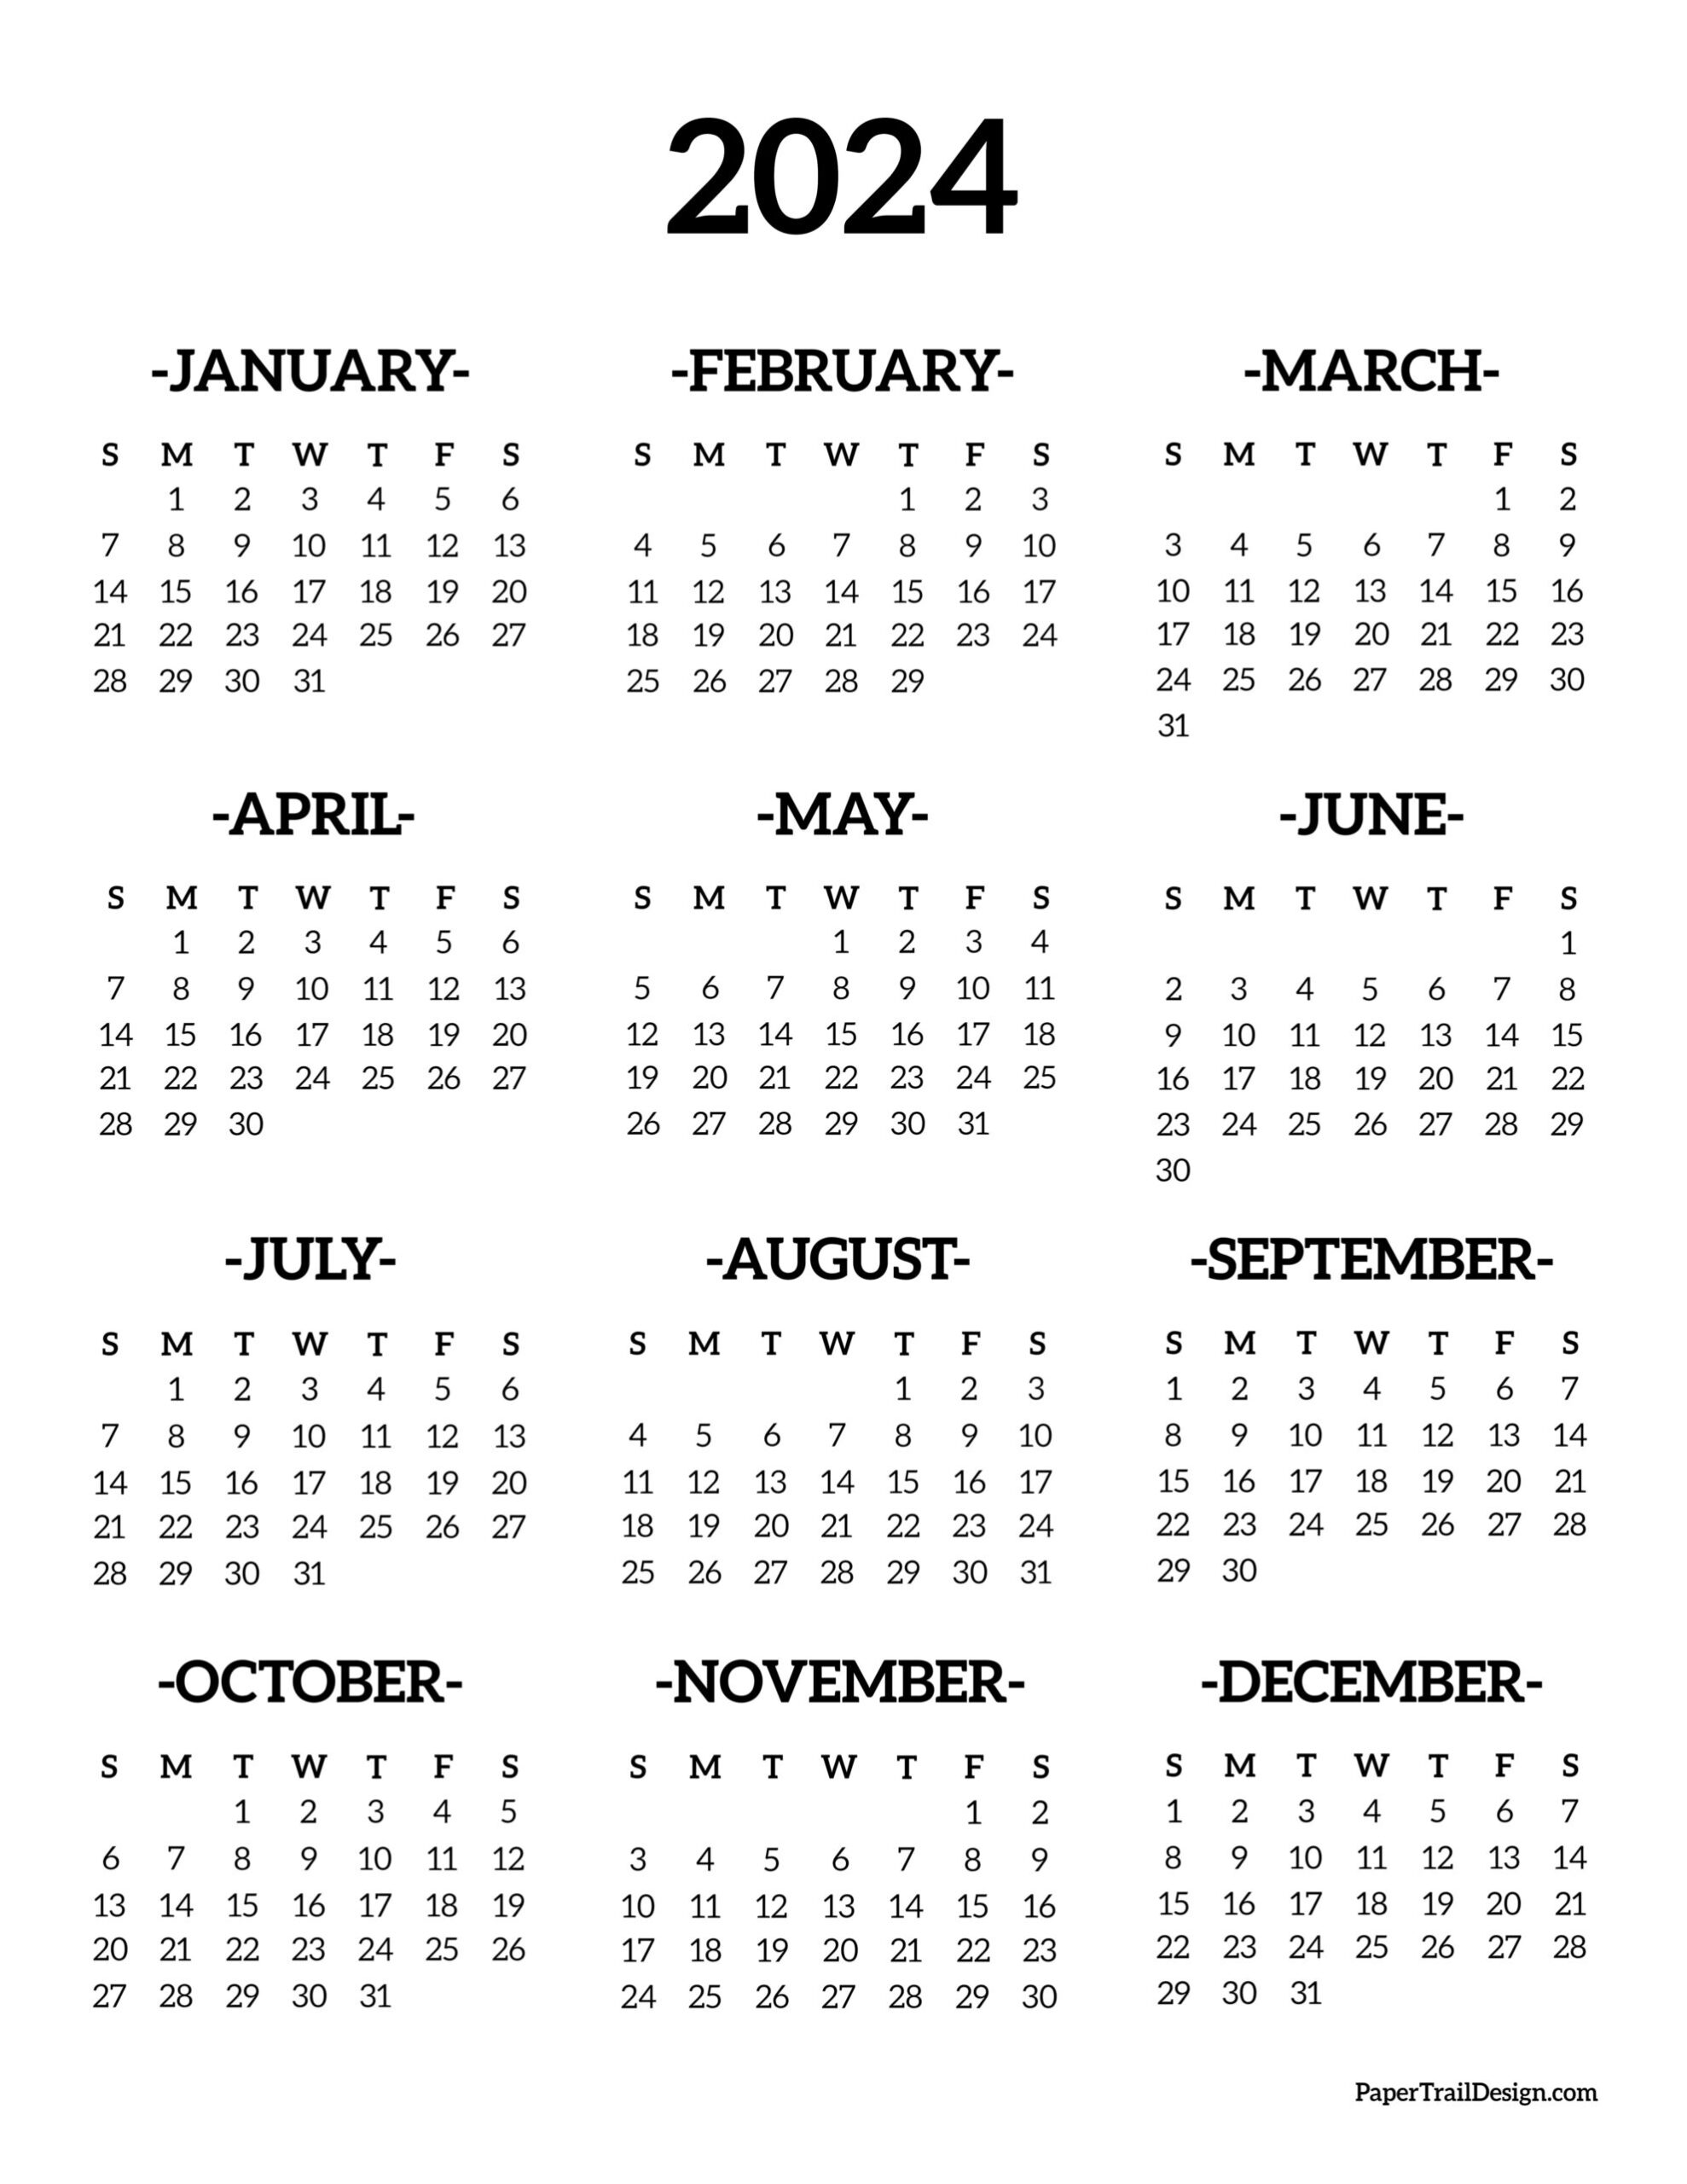 Calendar 2024 Printable One Page - Paper Trail Design | Printable Calendar Of 2024